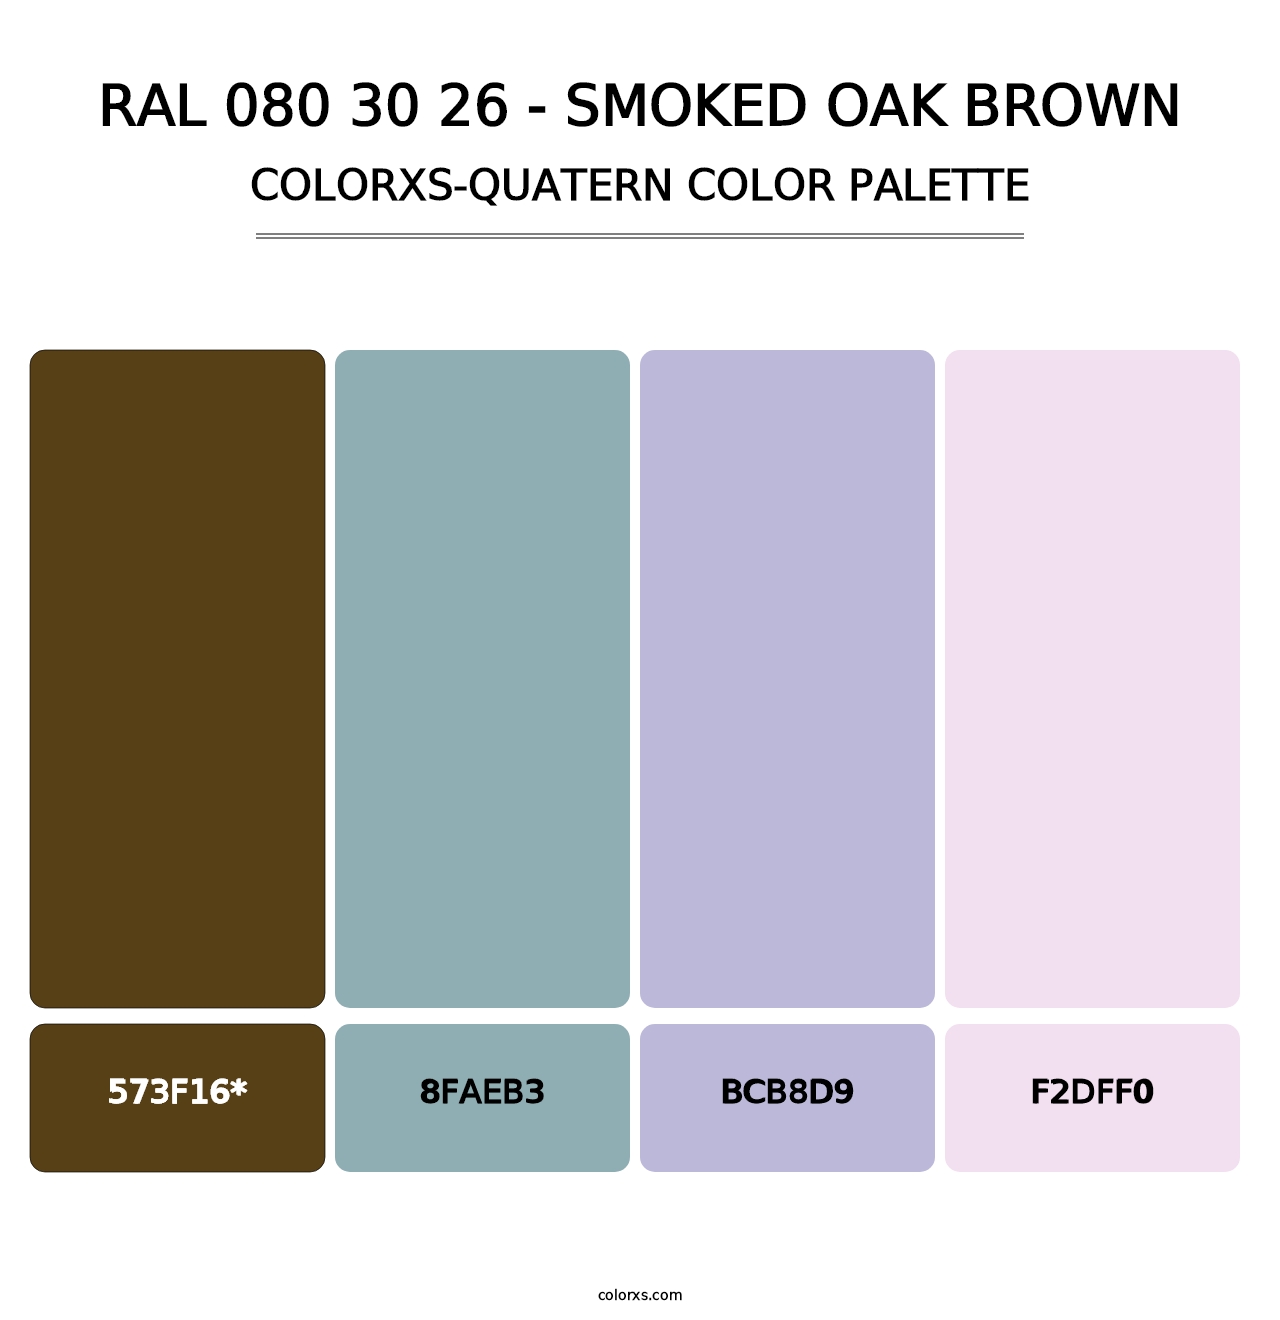 RAL 080 30 26 - Smoked Oak Brown - Colorxs Quatern Palette